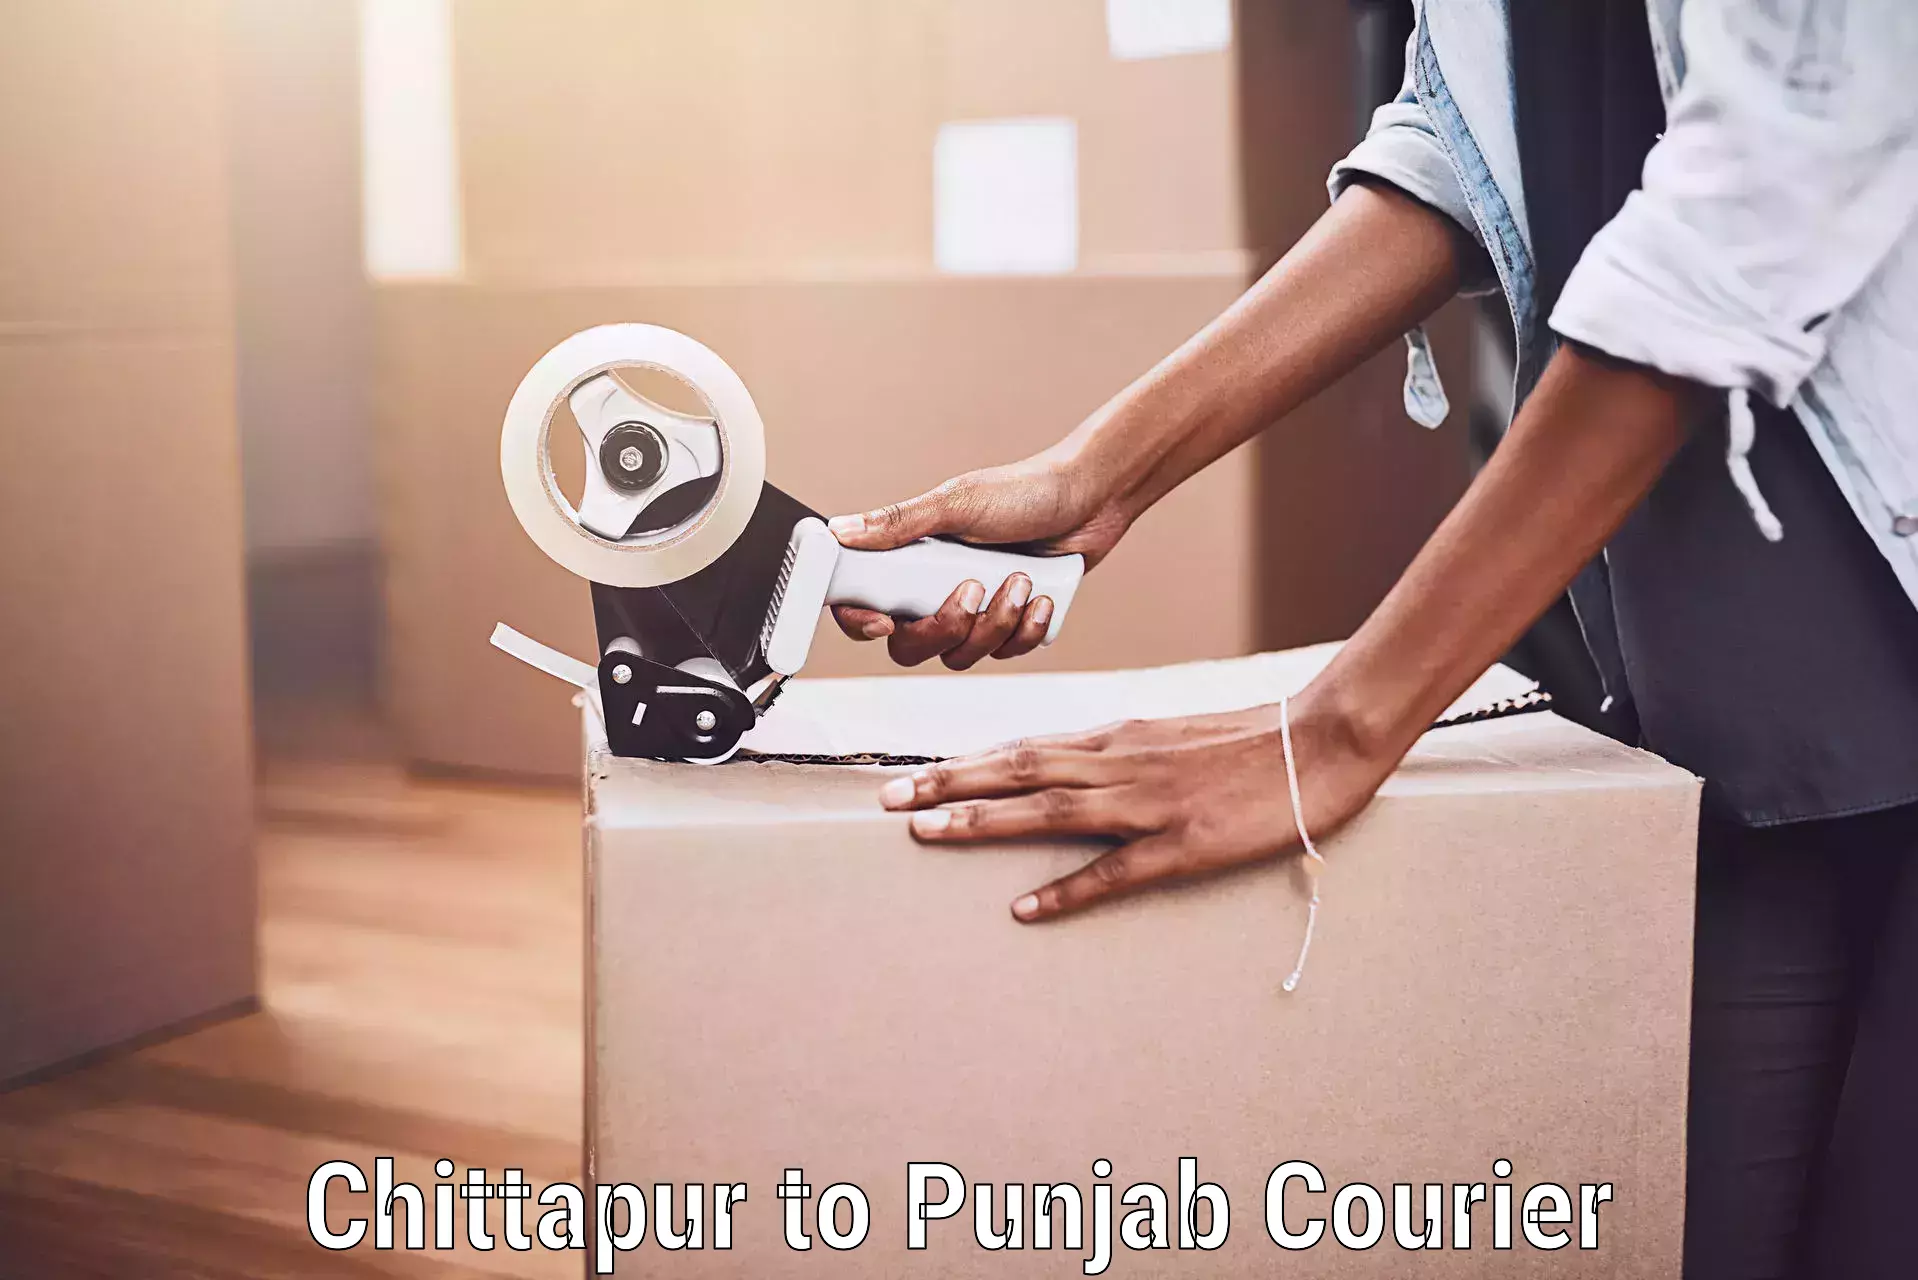 Luggage shipment specialists Chittapur to Punjab